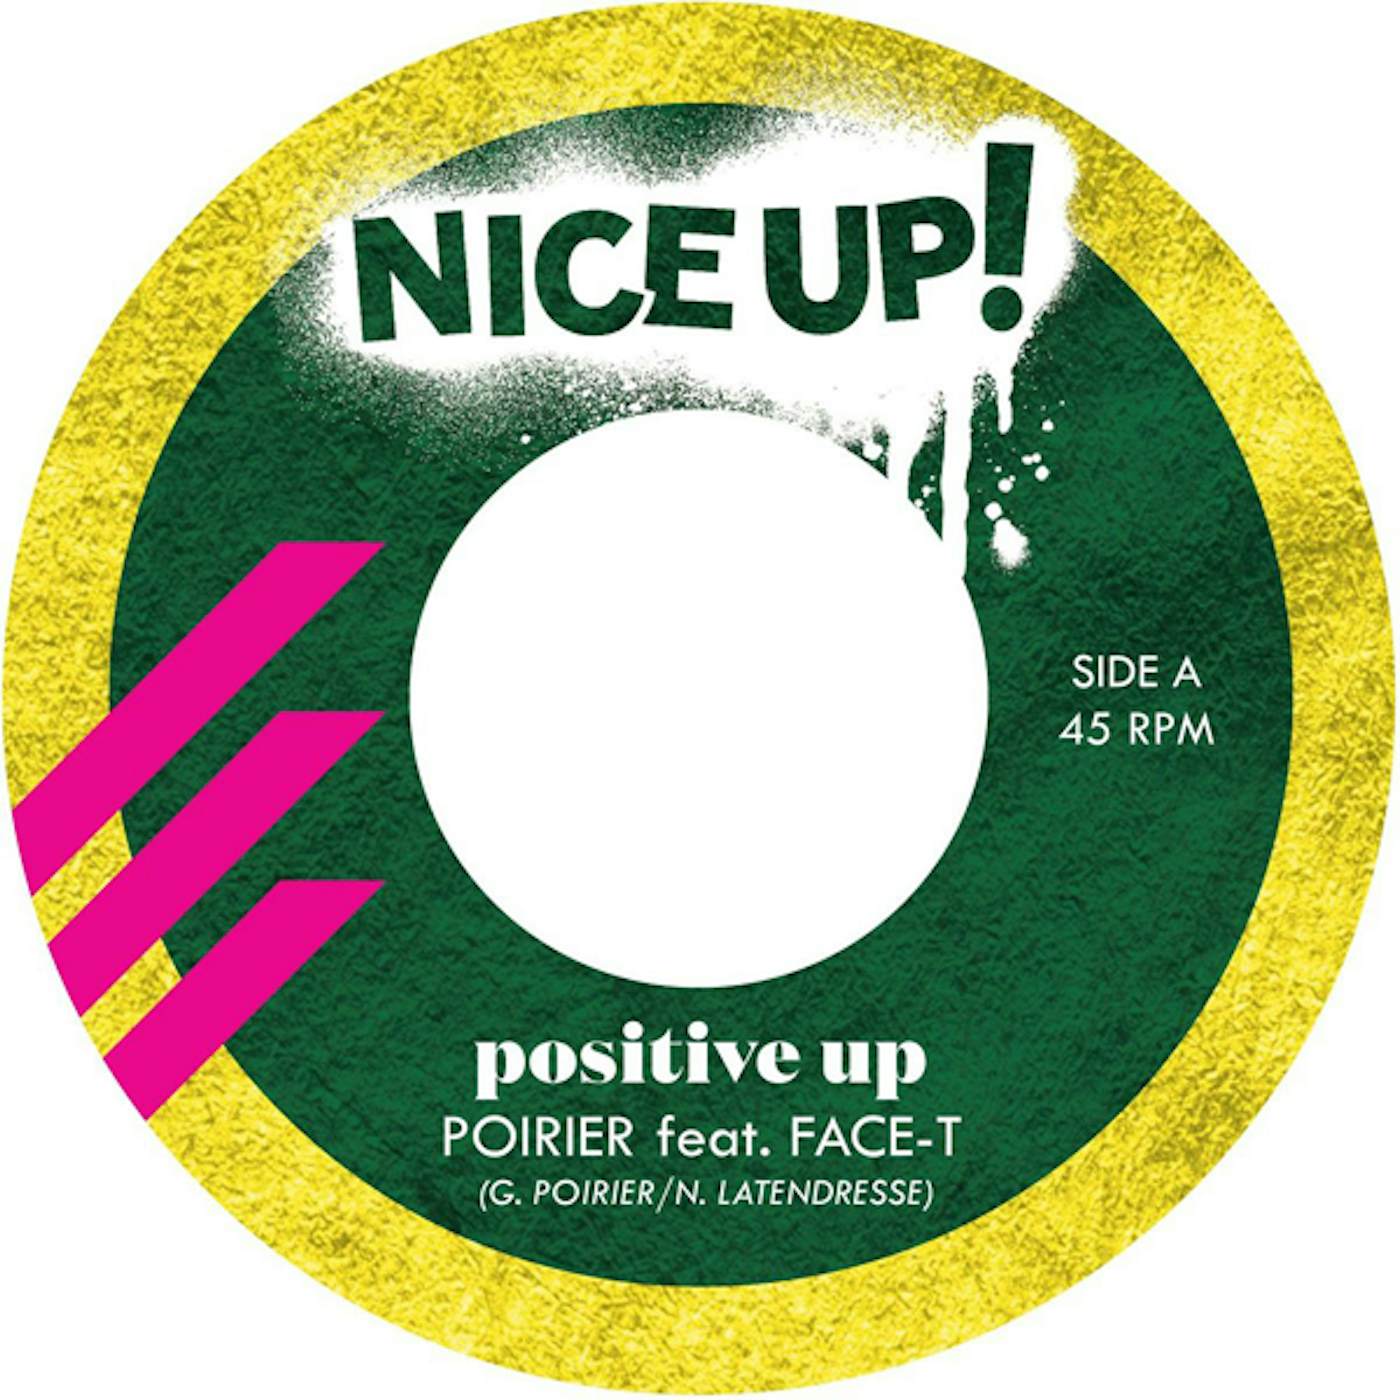 Poirier Positive Up Vinyl Record